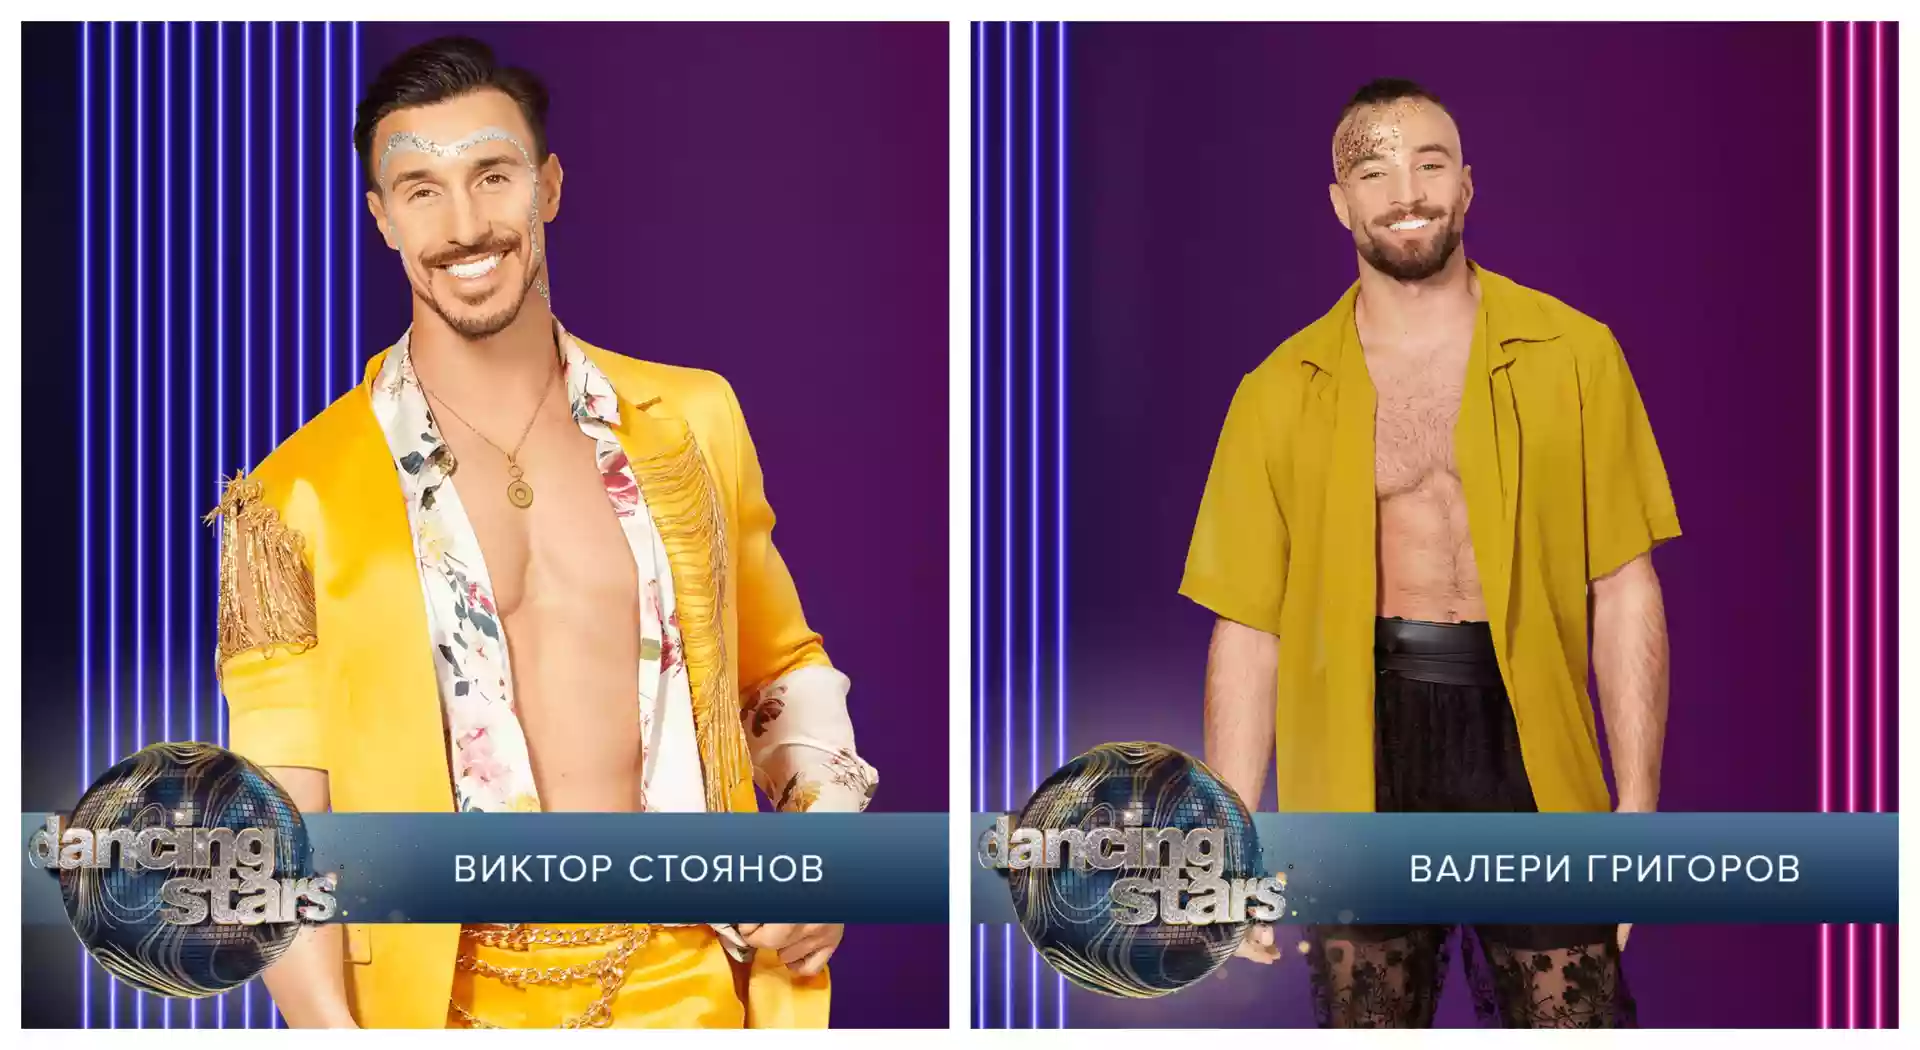 Dancing Stars, Виктор Стоянов, Валери Григоров